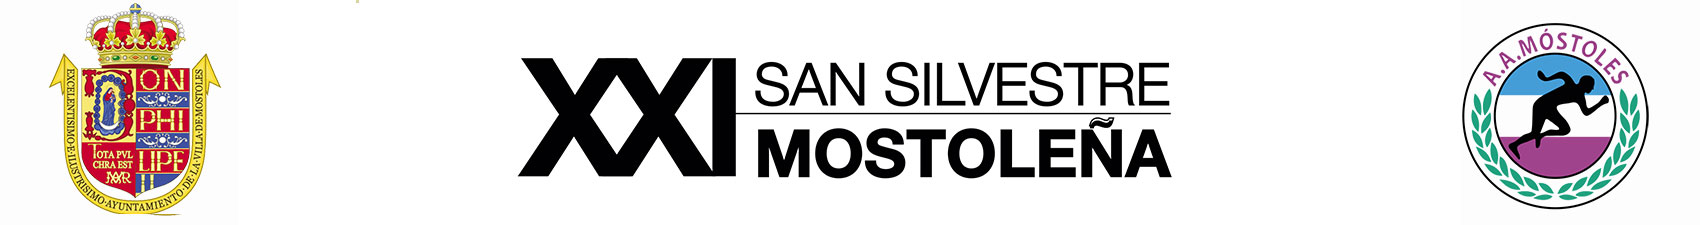 XXI San Silvestre Mostolea - Mayores